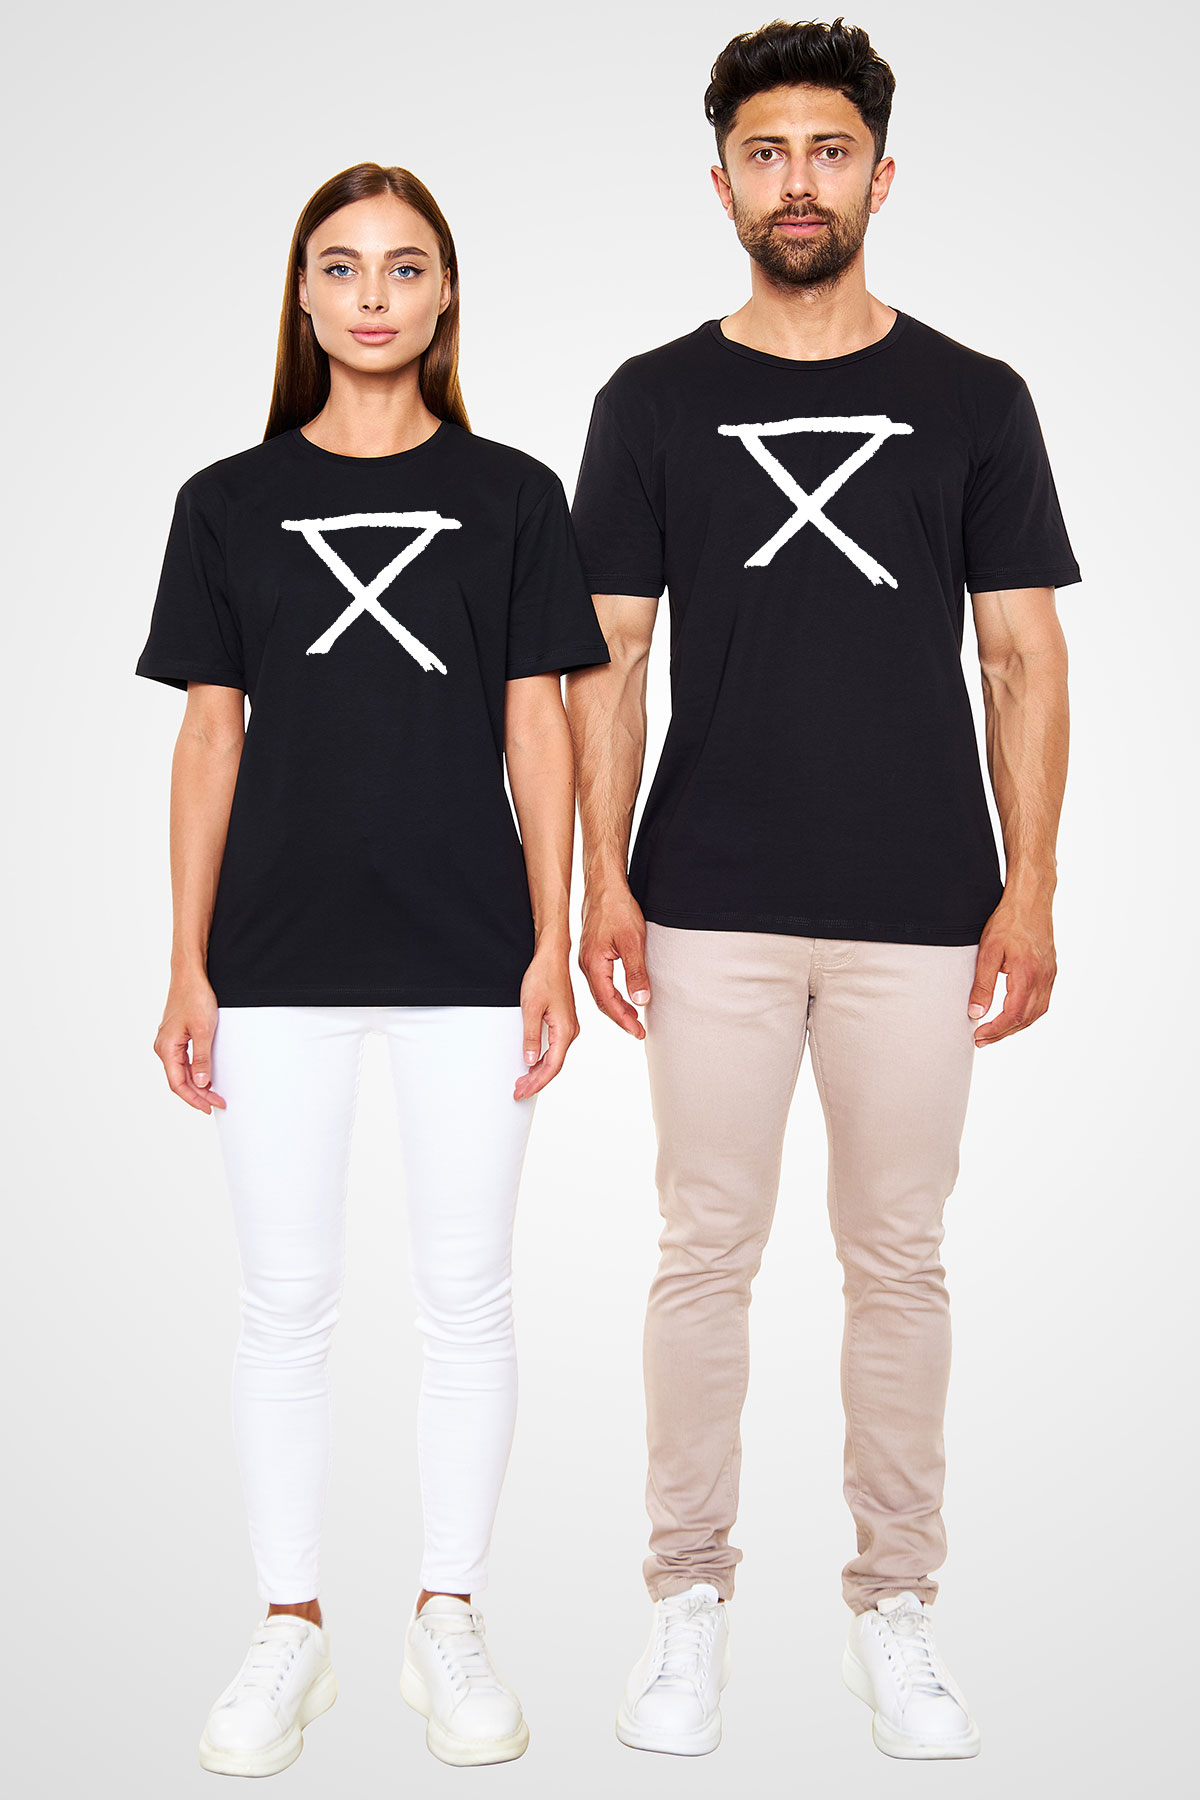 Circa Survive Black Unisex T-Shirt - Tees - Shirts